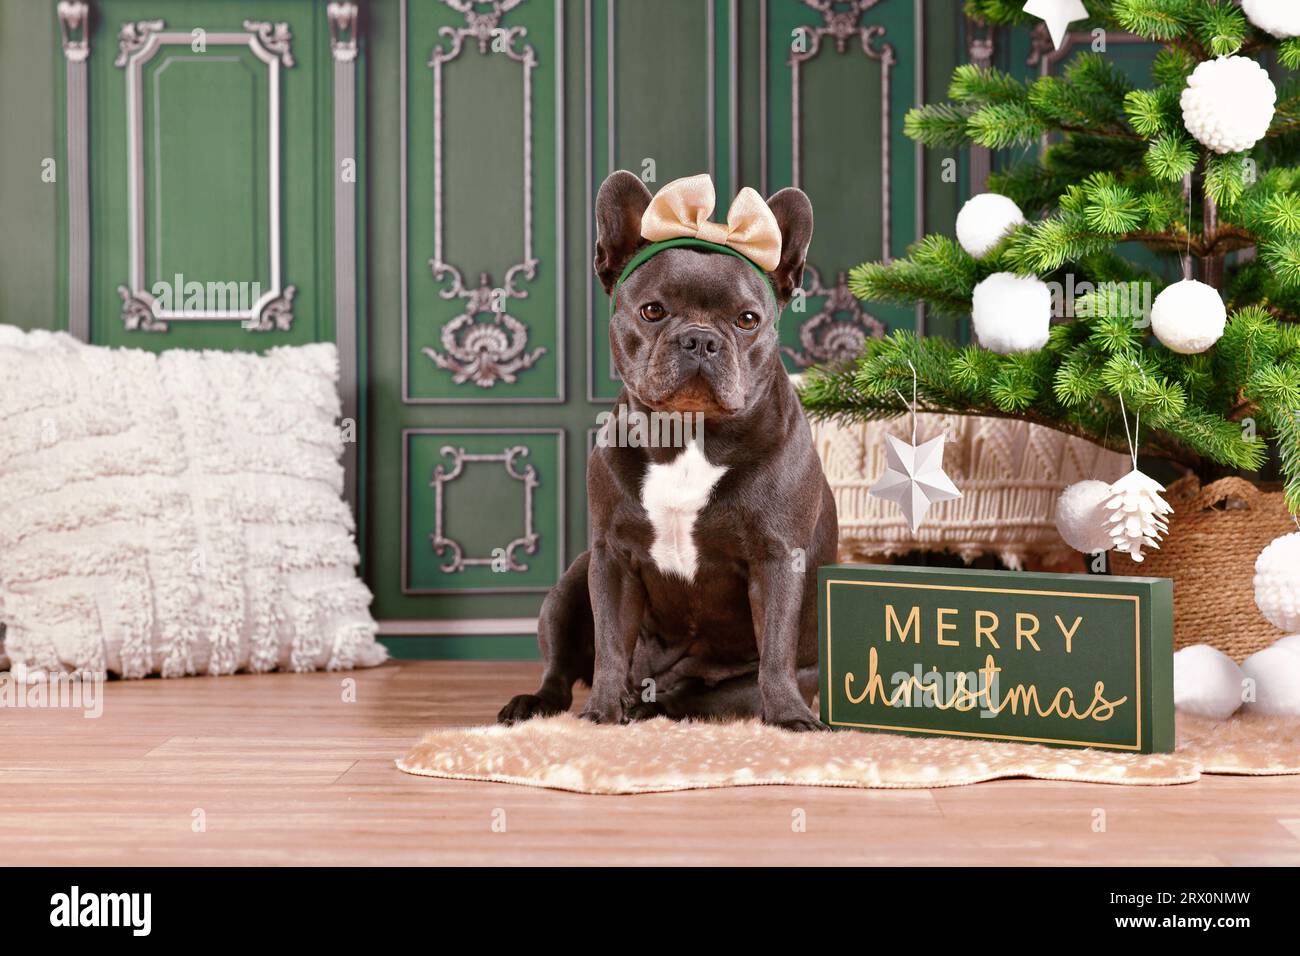 French Bulldog dog wearing ribbon headband next to Christmas tree and Merry Christmas sign Stock Photo